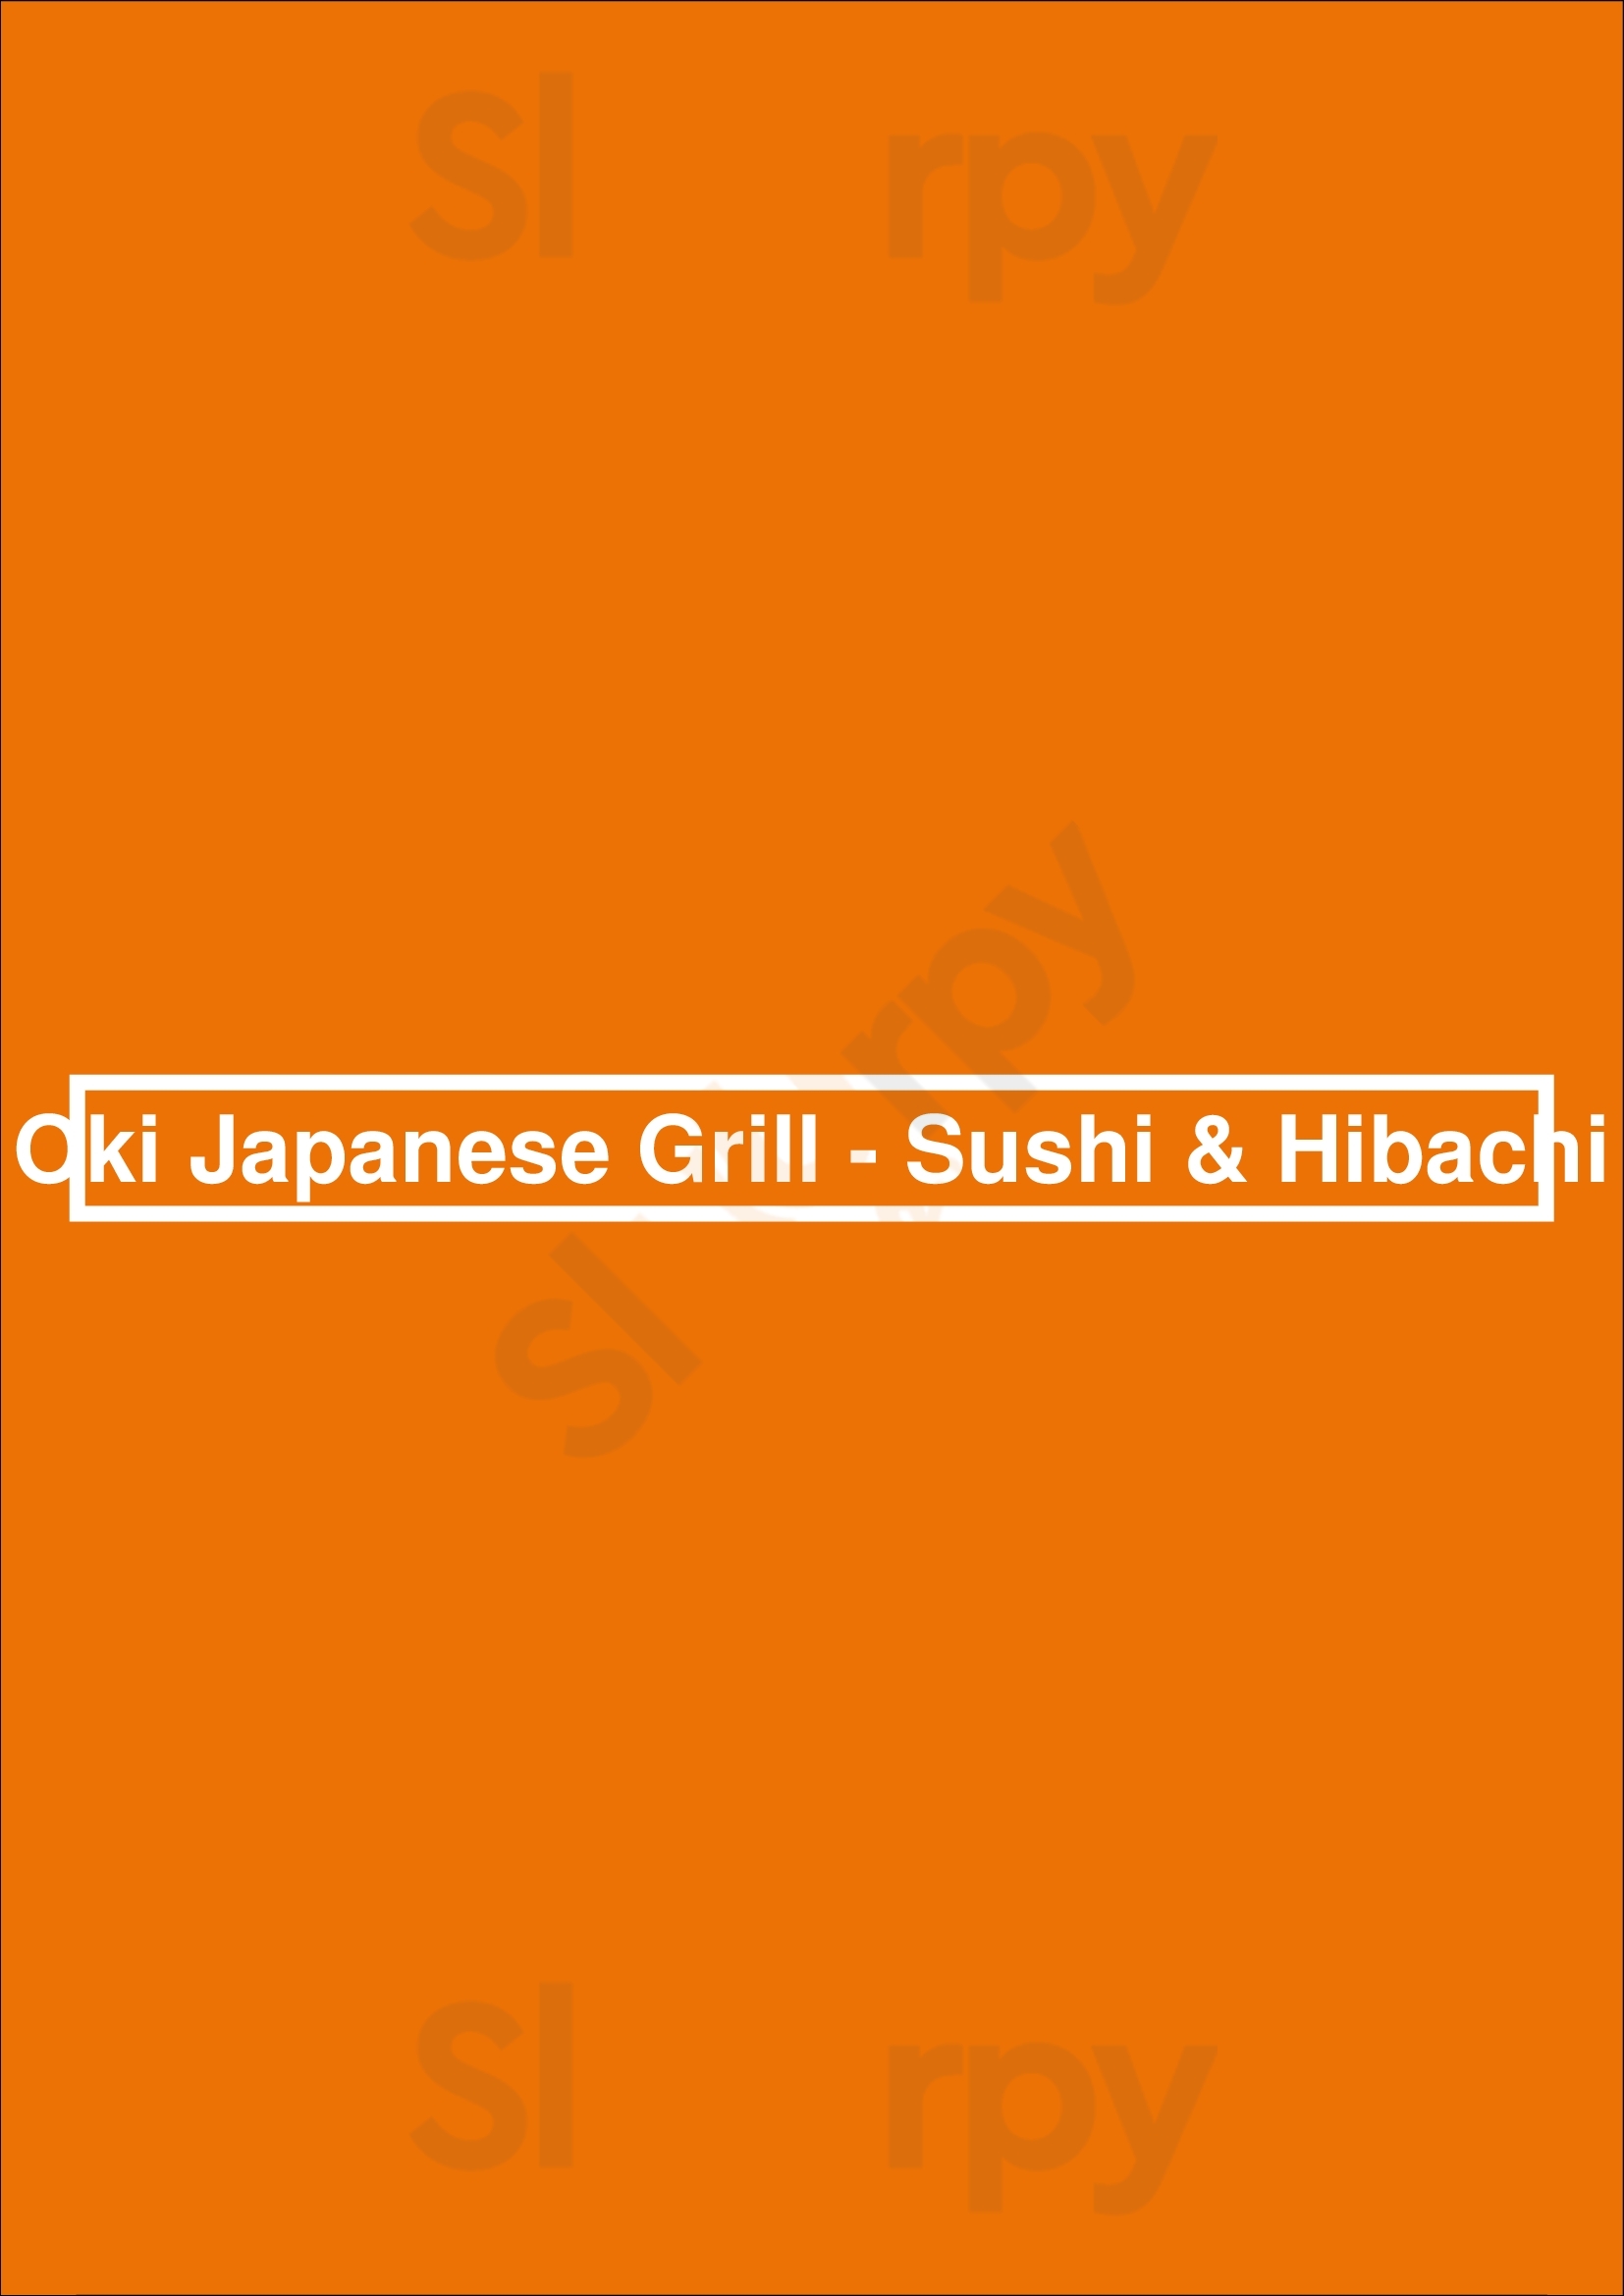 Oki Japanese Grill - Sushi & Hibachi Plano Menu - 1